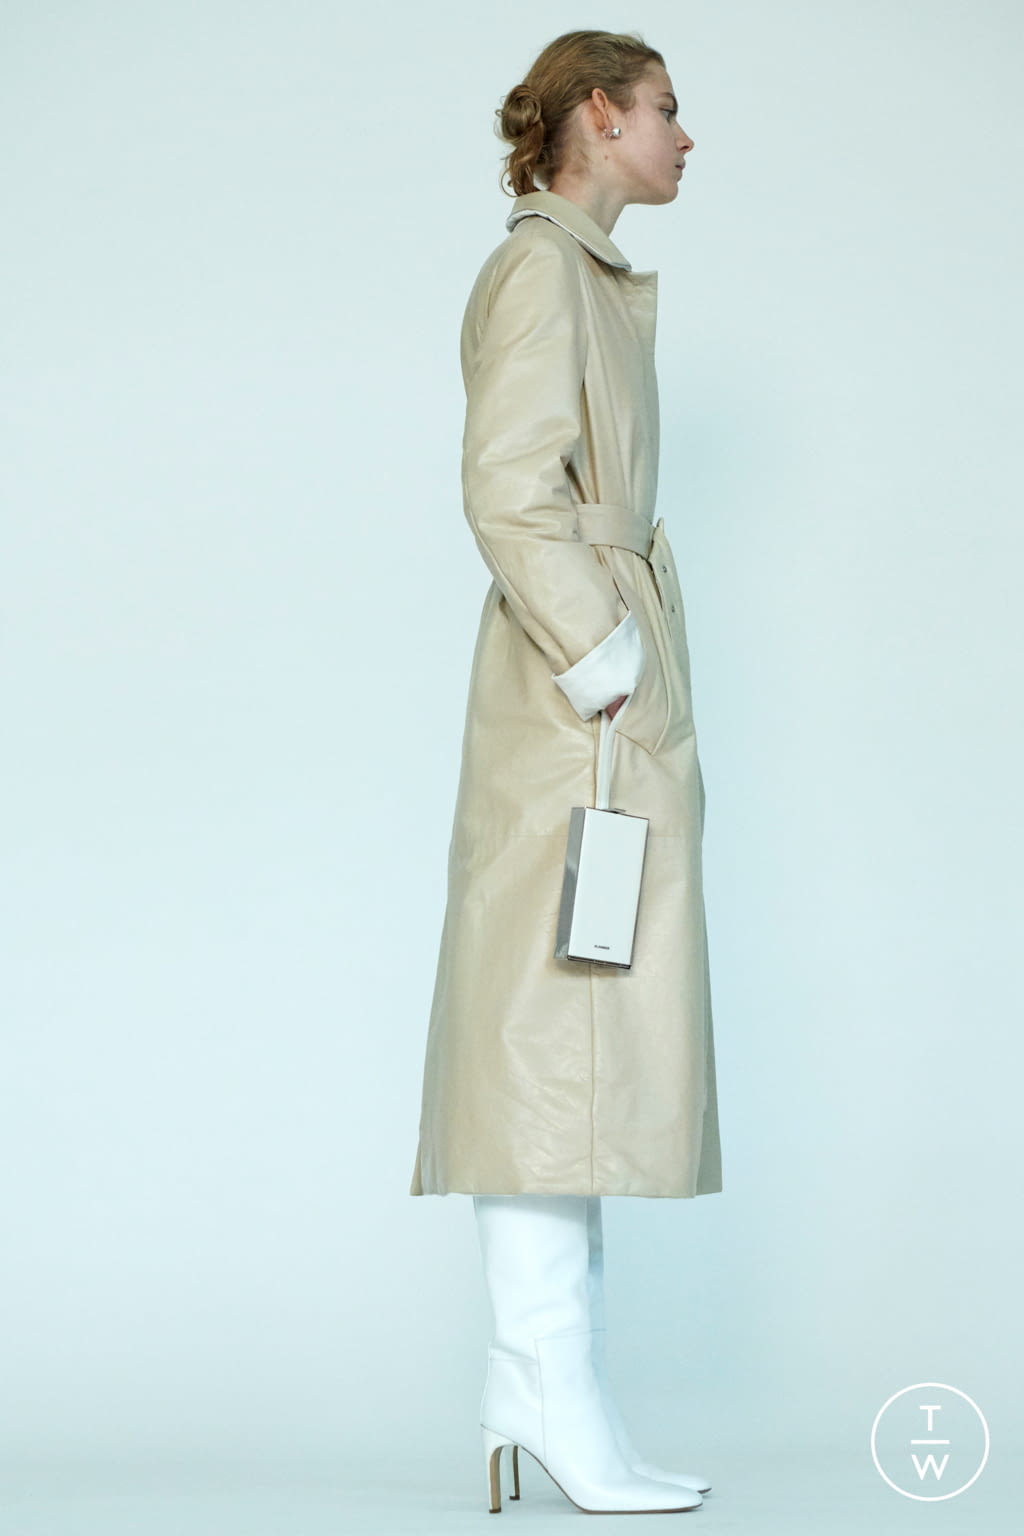 Jil Sander PF20 womenswear #38 - Tagwalk: The Fashion Search Engine